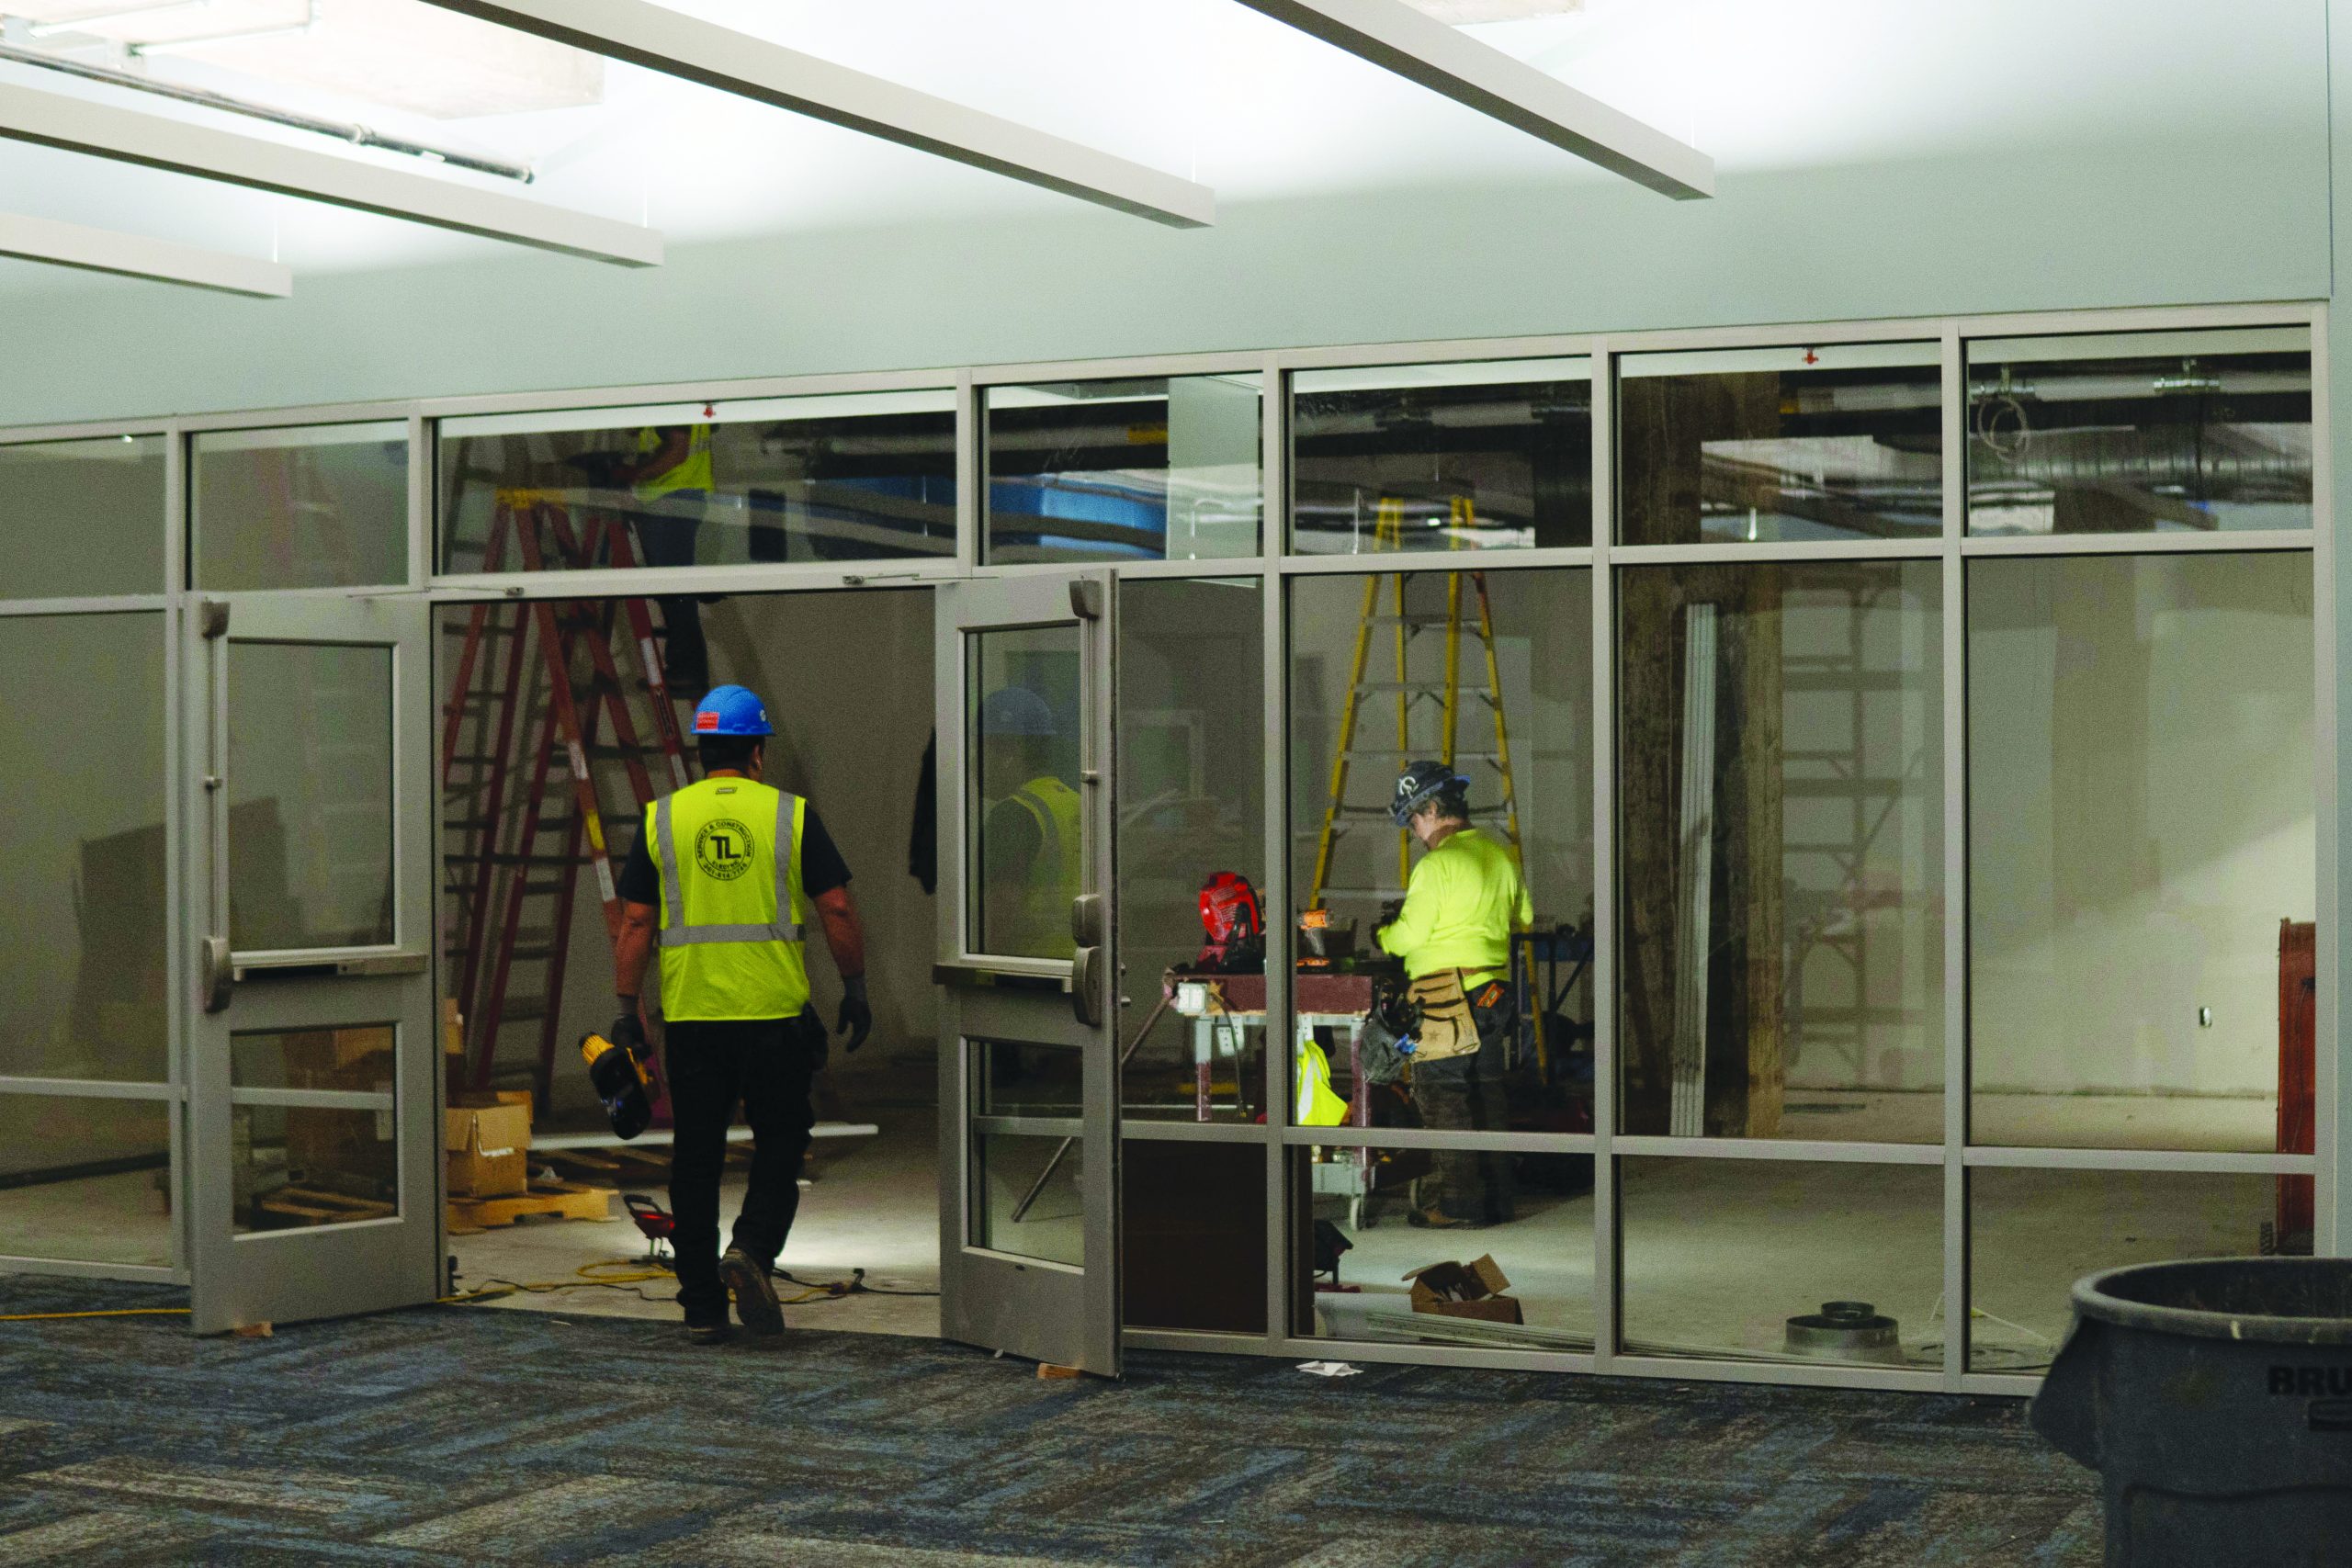 Sneak peek into the progress of White Library renovation